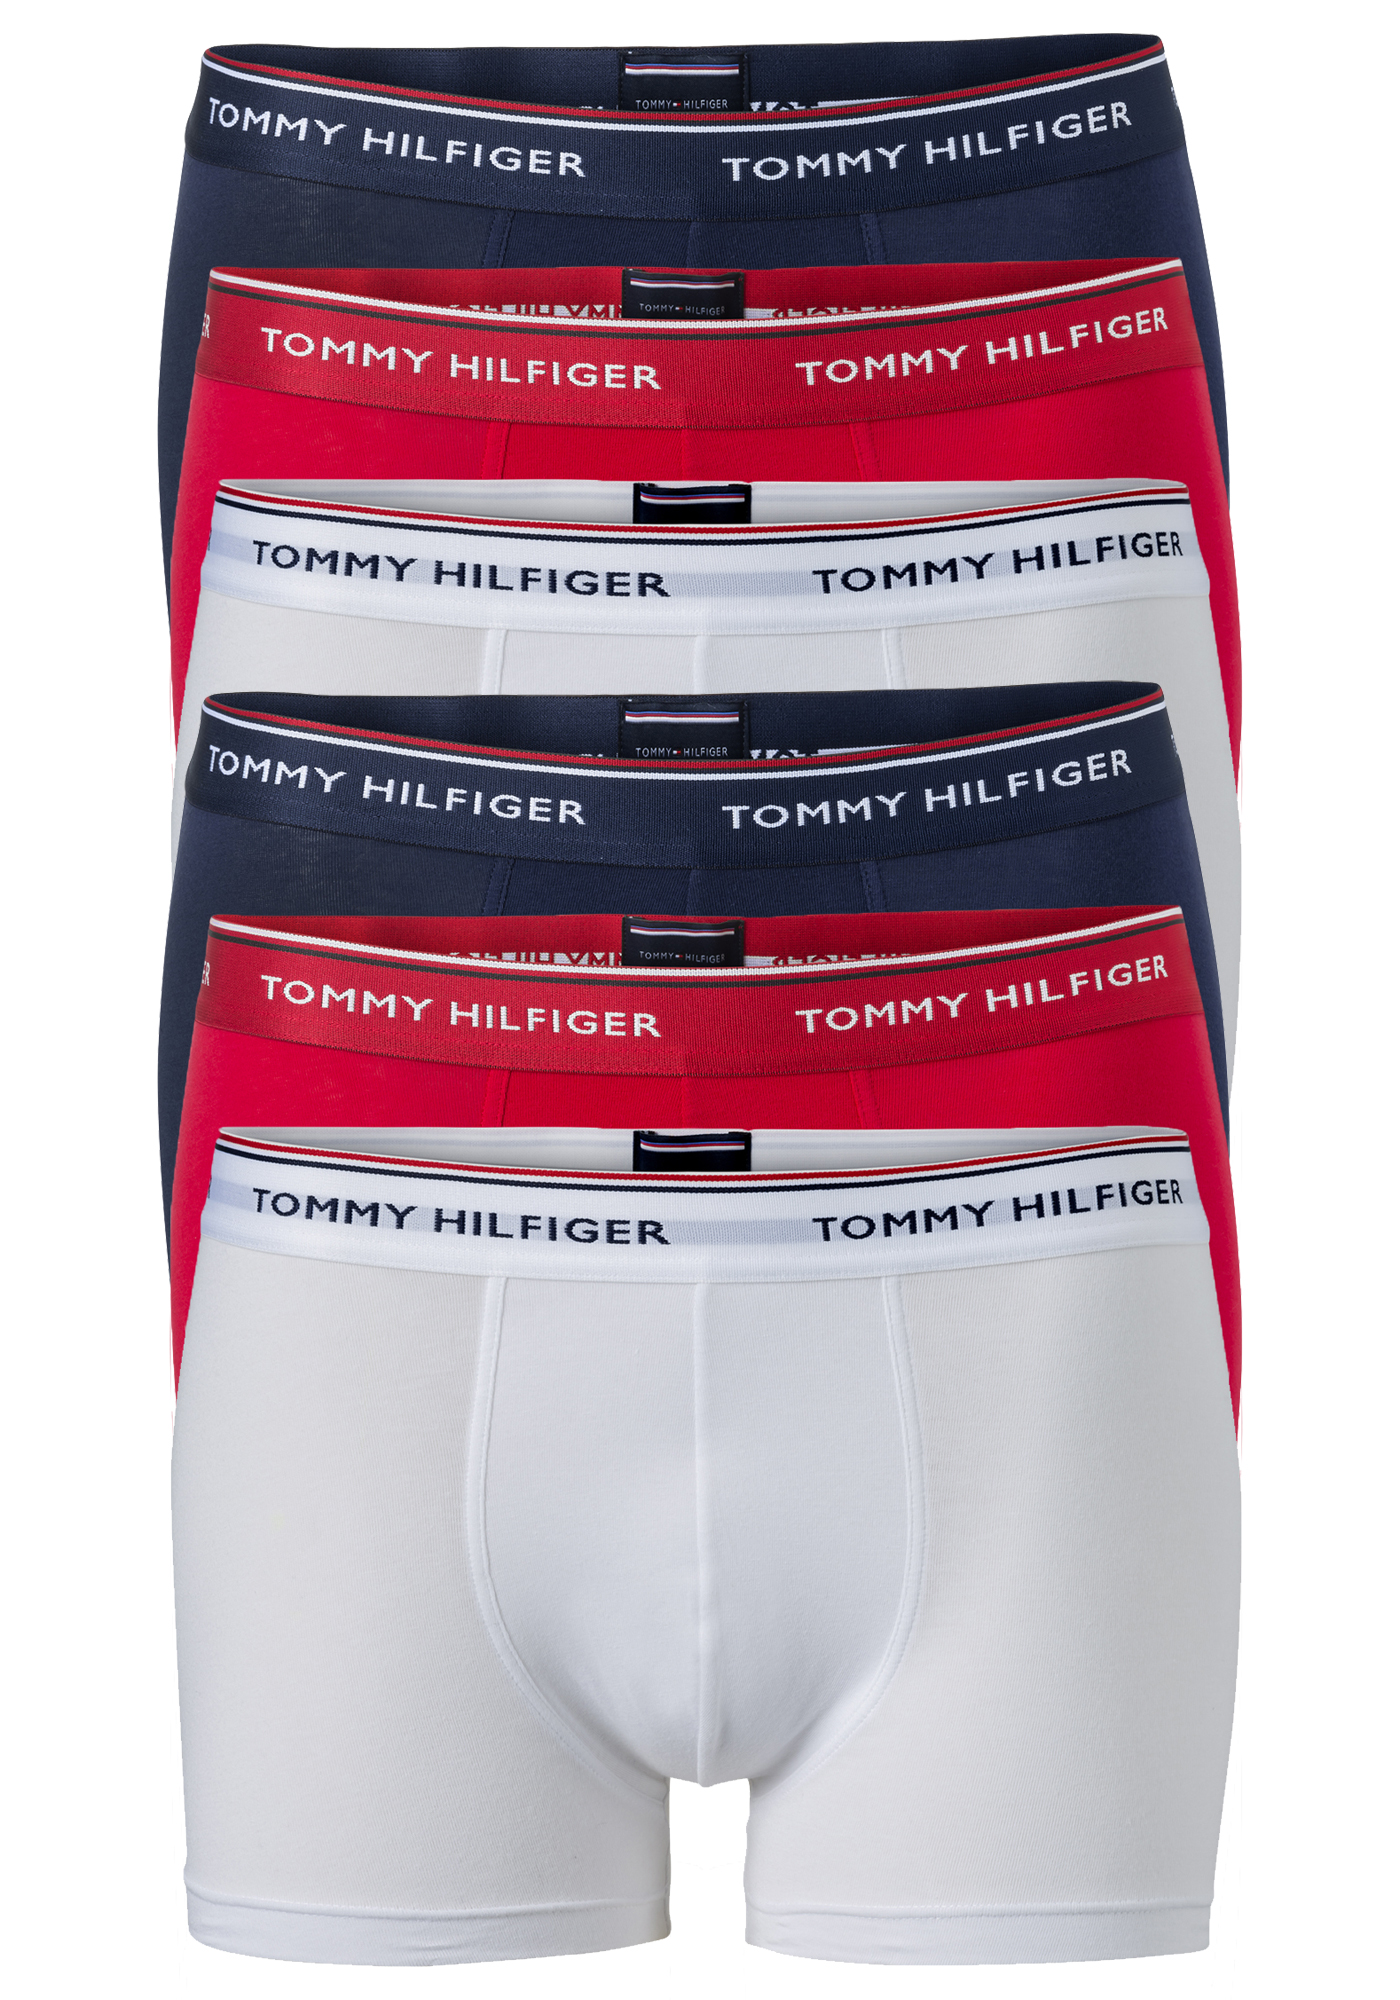 Tommy Hilfiger trunks (2x 3-pack), heren boxers normale lengte, rood, wit en blauw